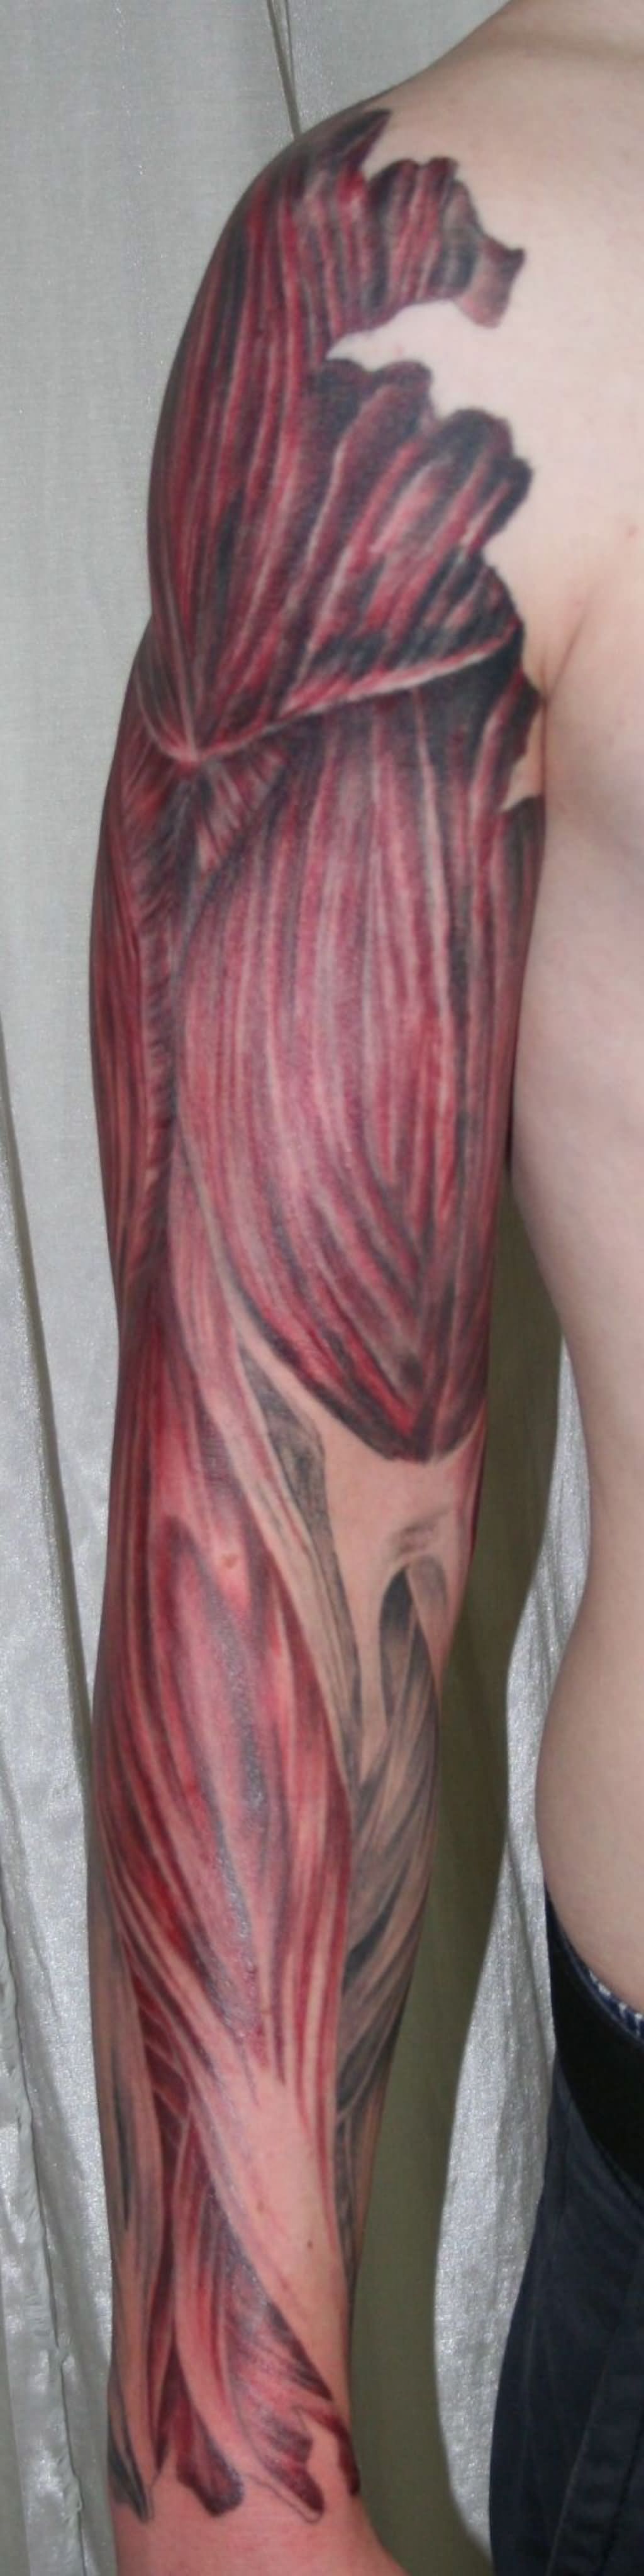 Inspiring Ripped Skin Muscle Tattoo On Full Sleeve